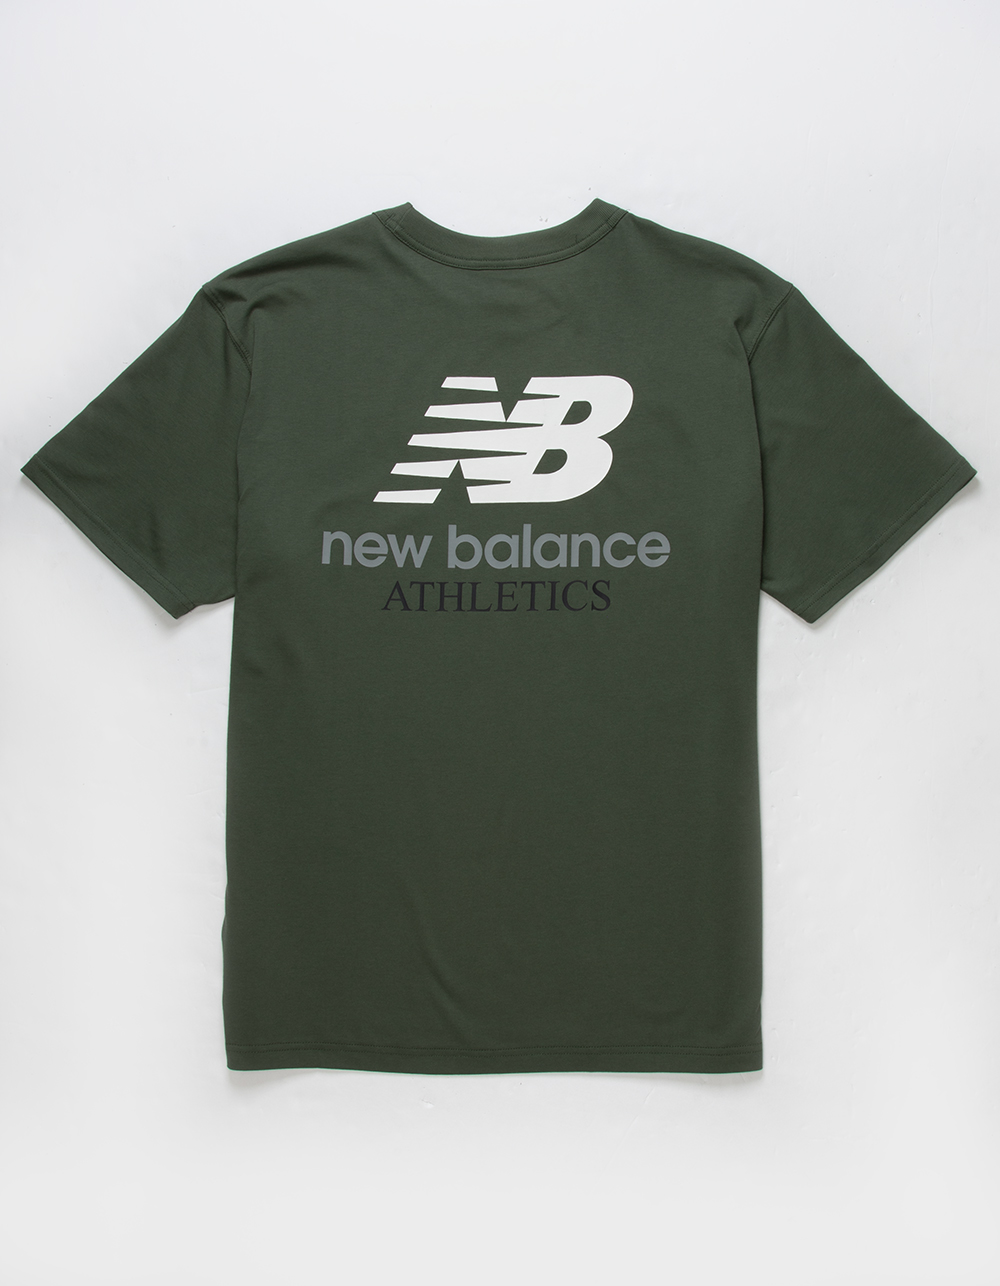 NEW BALANCE Athletics Logo Mens Tillys OLIVE Tee - 